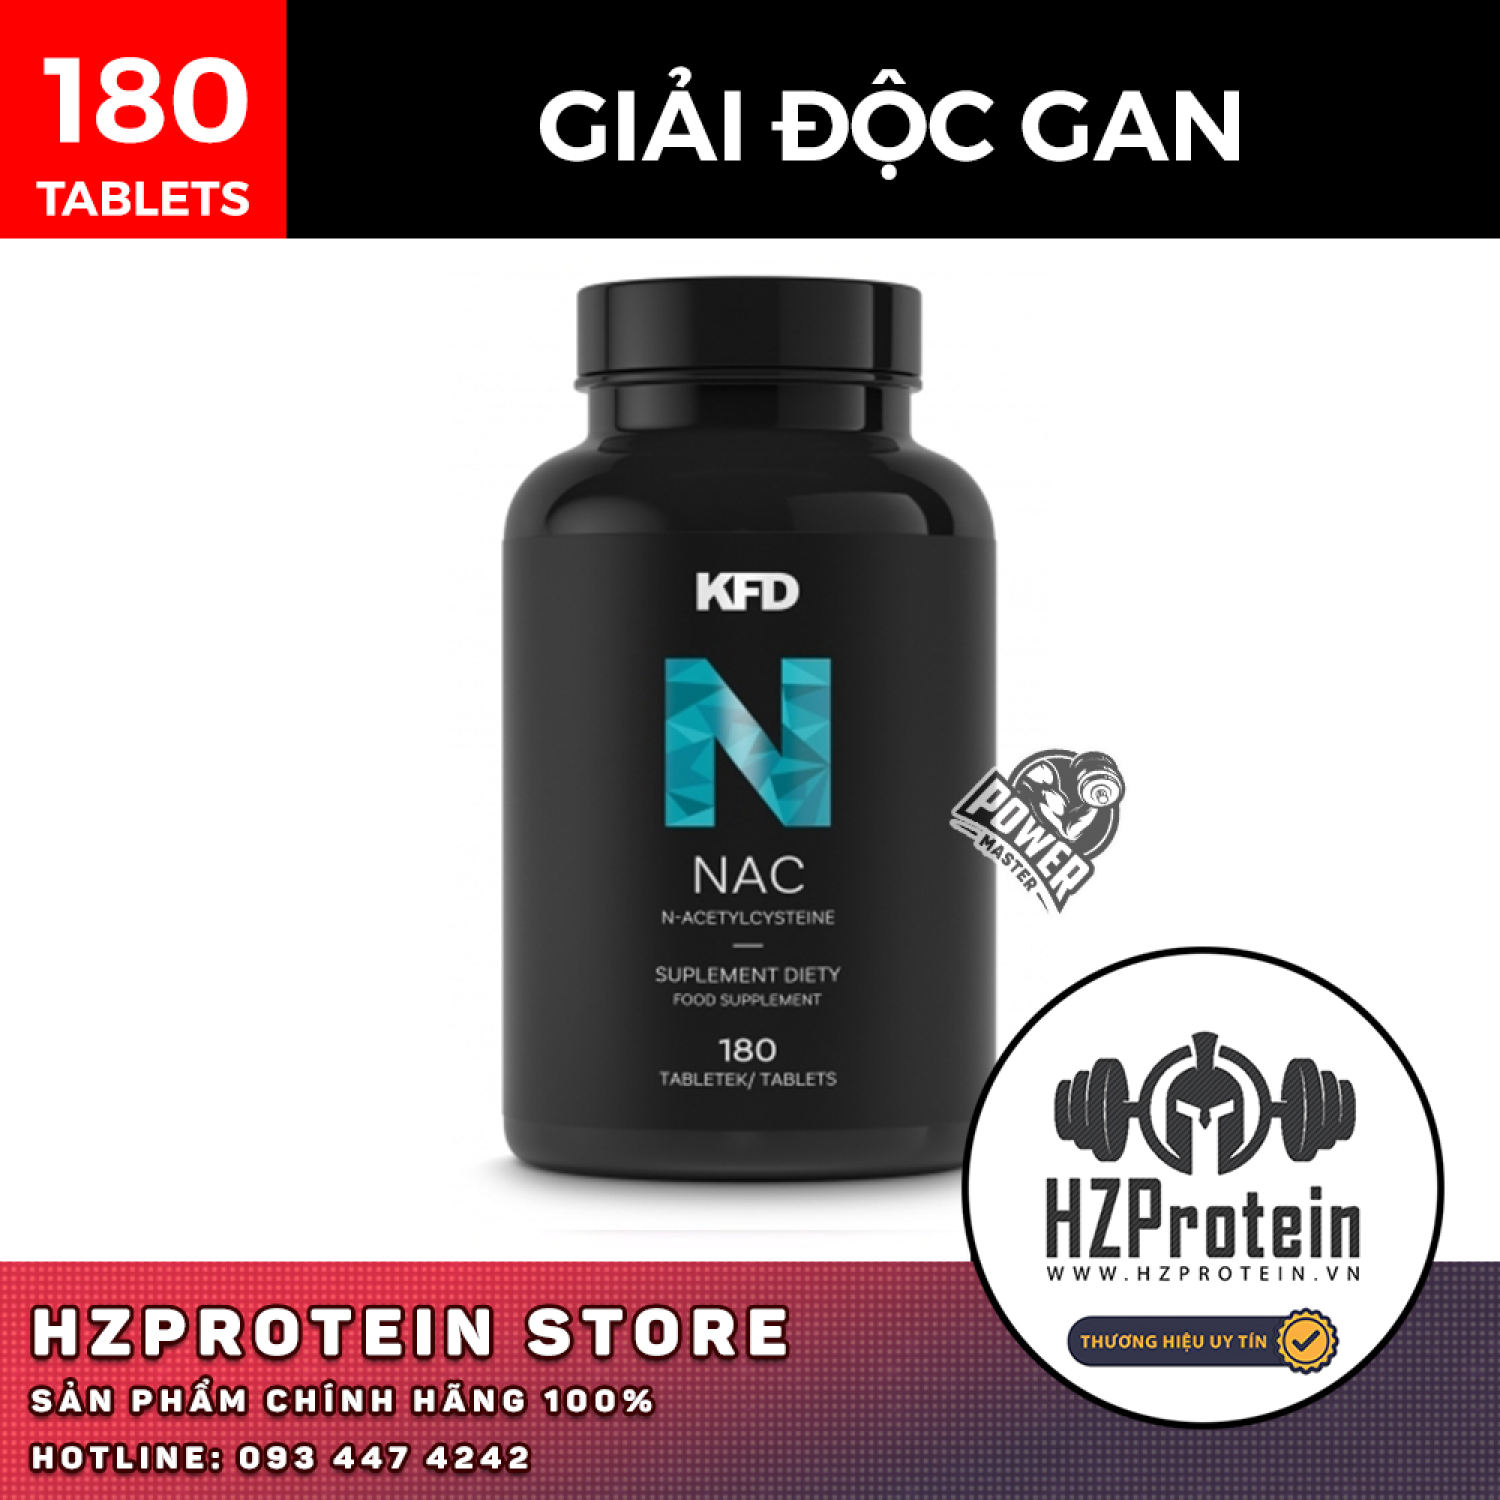 KFD NAC, Liver Detox Supplement, 180 Capsules